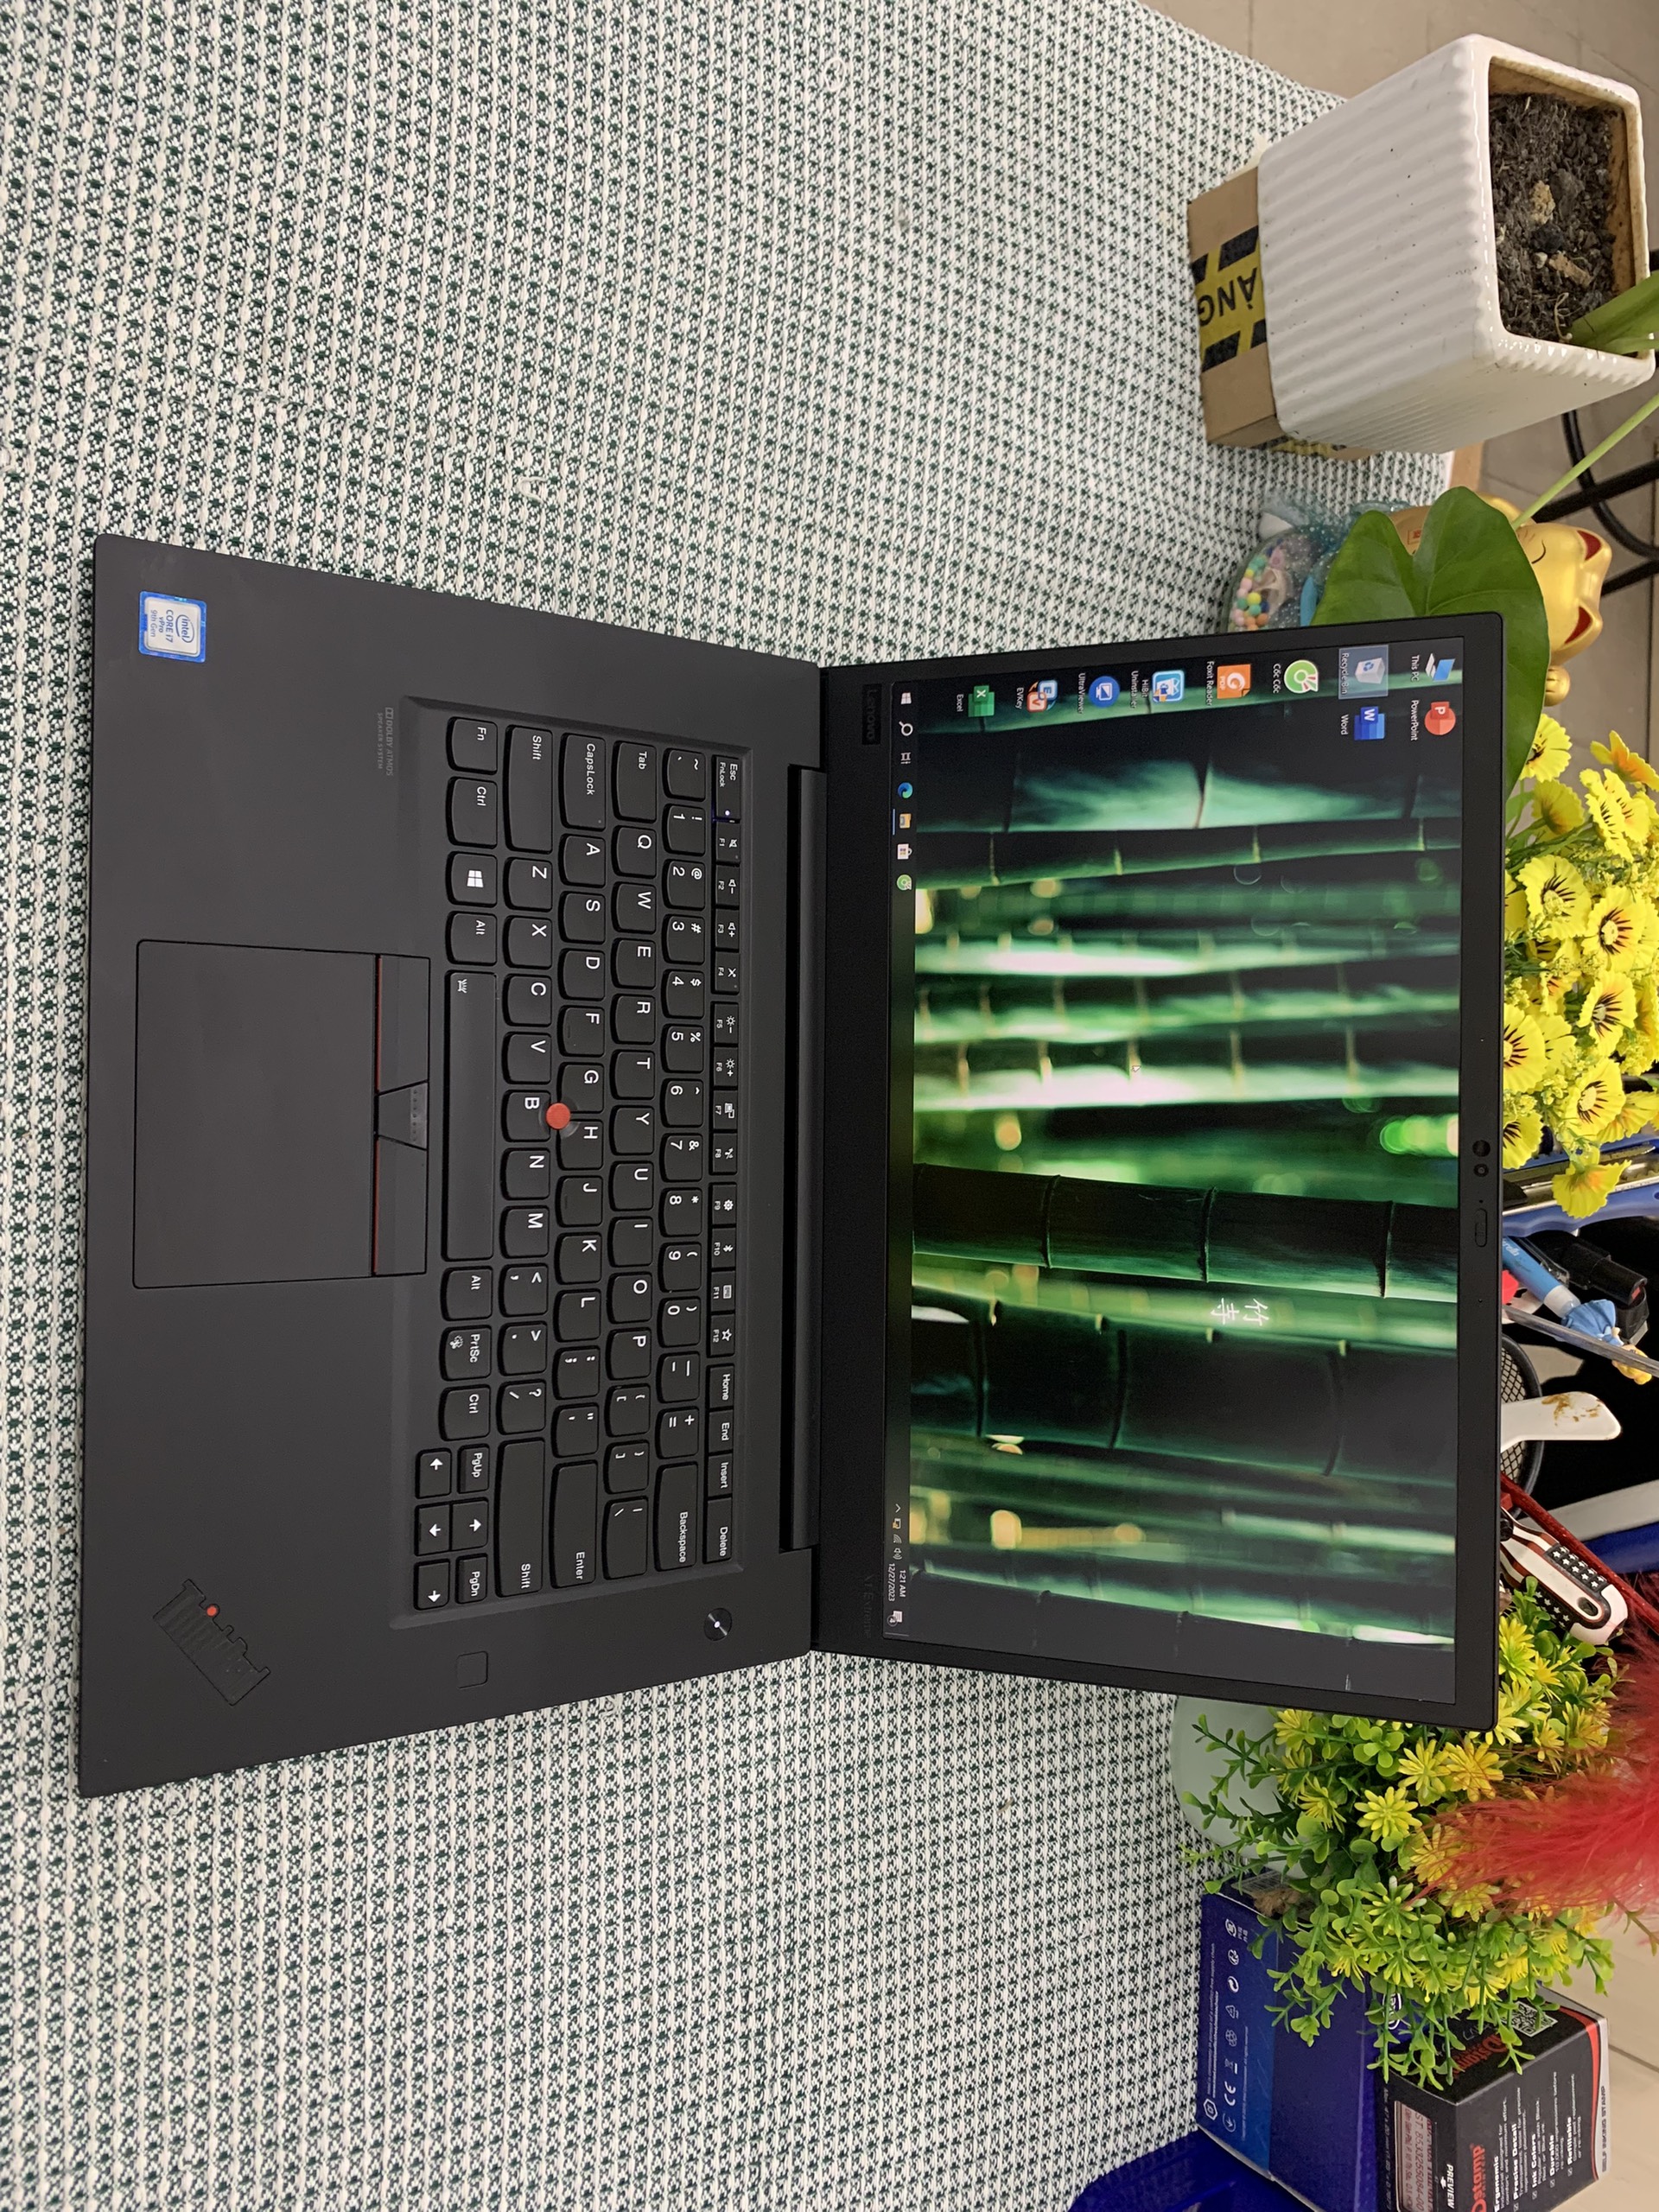 ThinkPad x1 Extreme 2nd